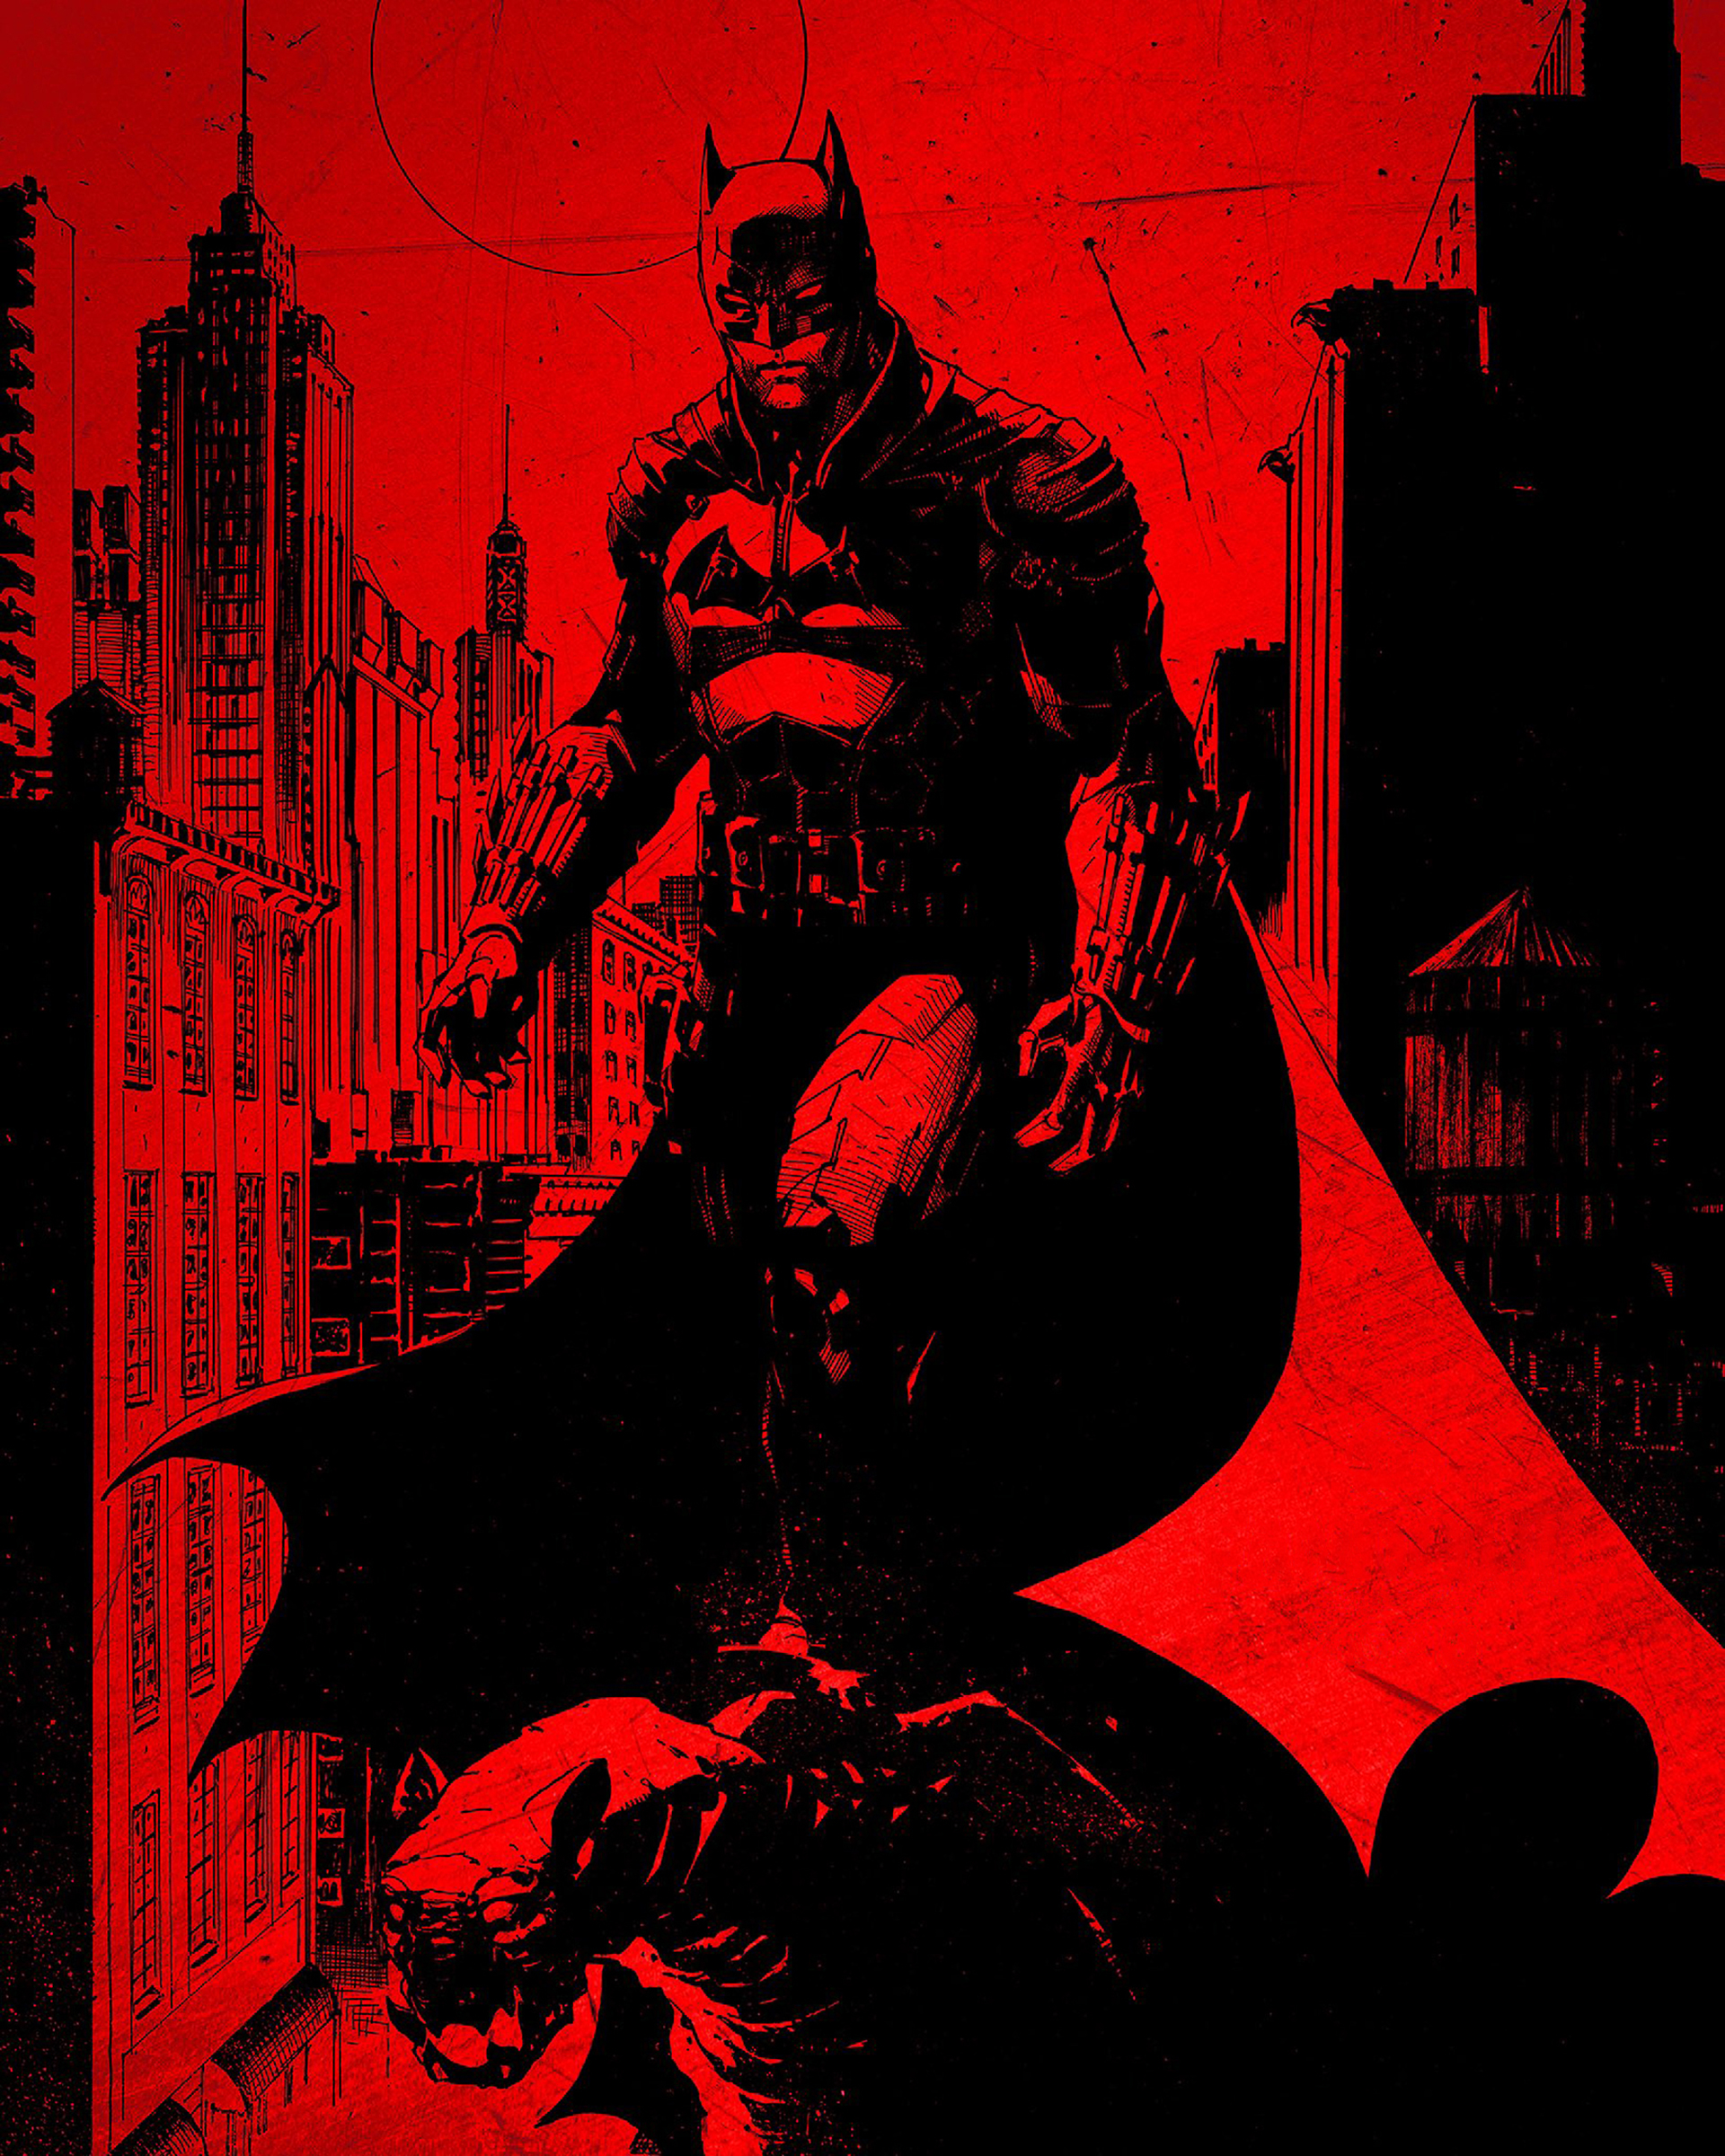 The Batman 4k Wallpapers - Top Ultra 4k The Batman Backgrounds Download